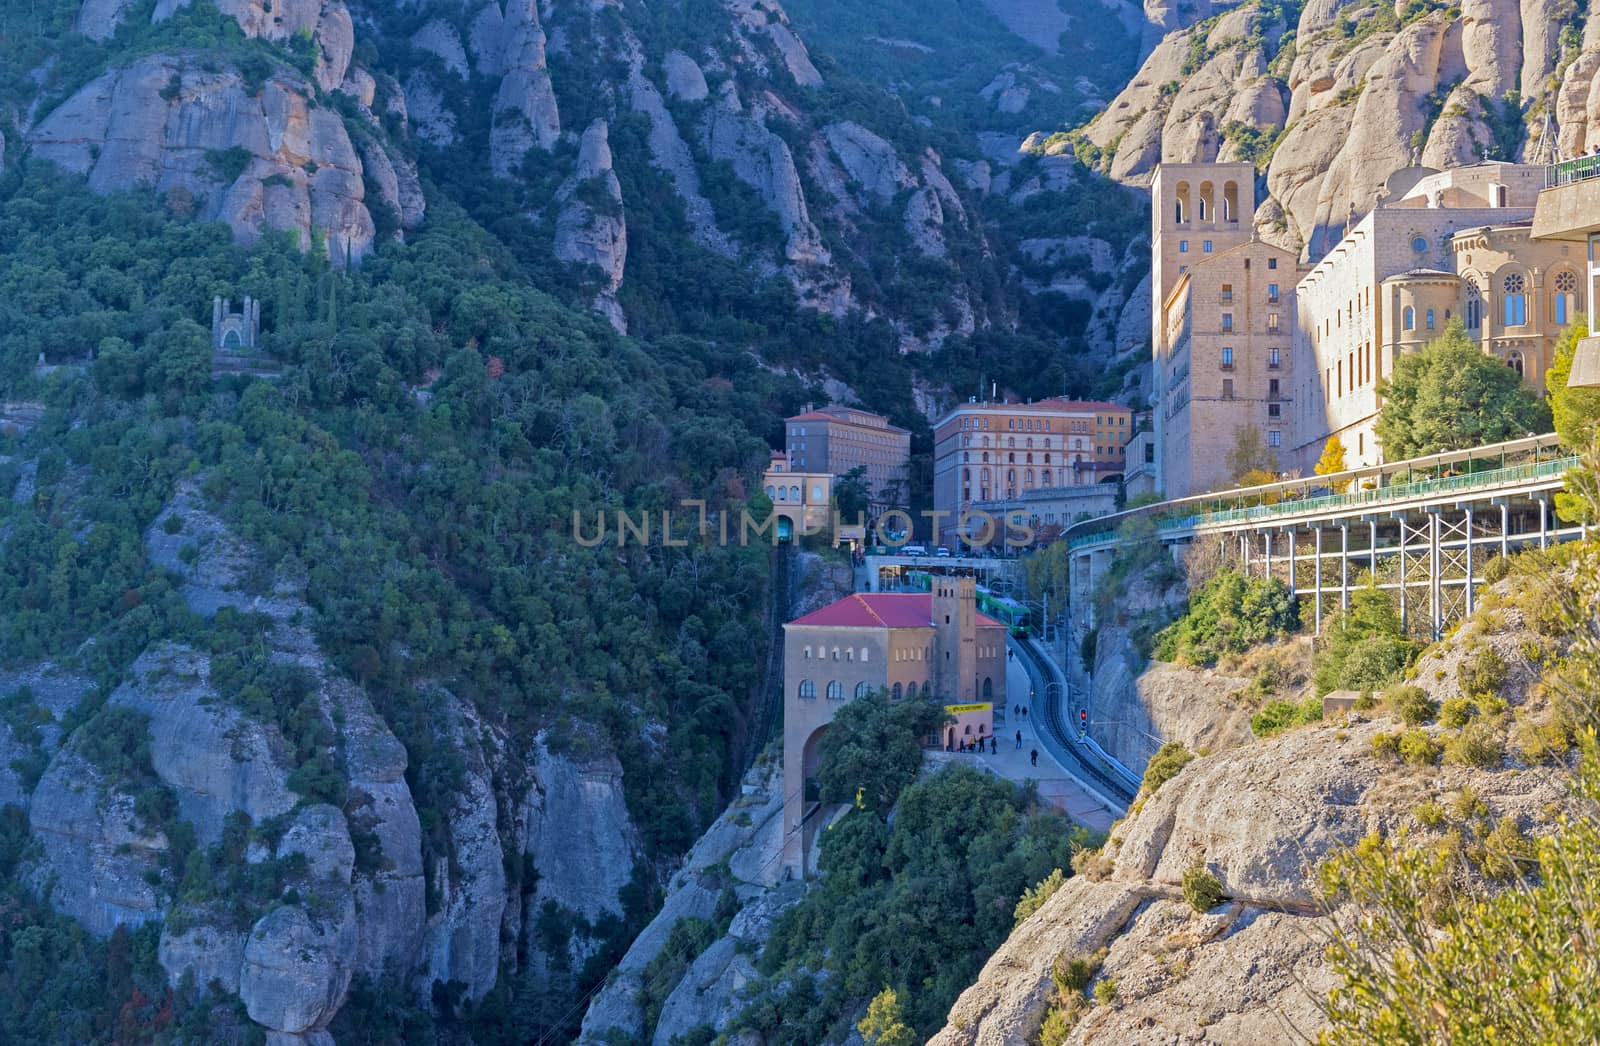 Montserrat monastery near Barcelona, Spain by Marcus